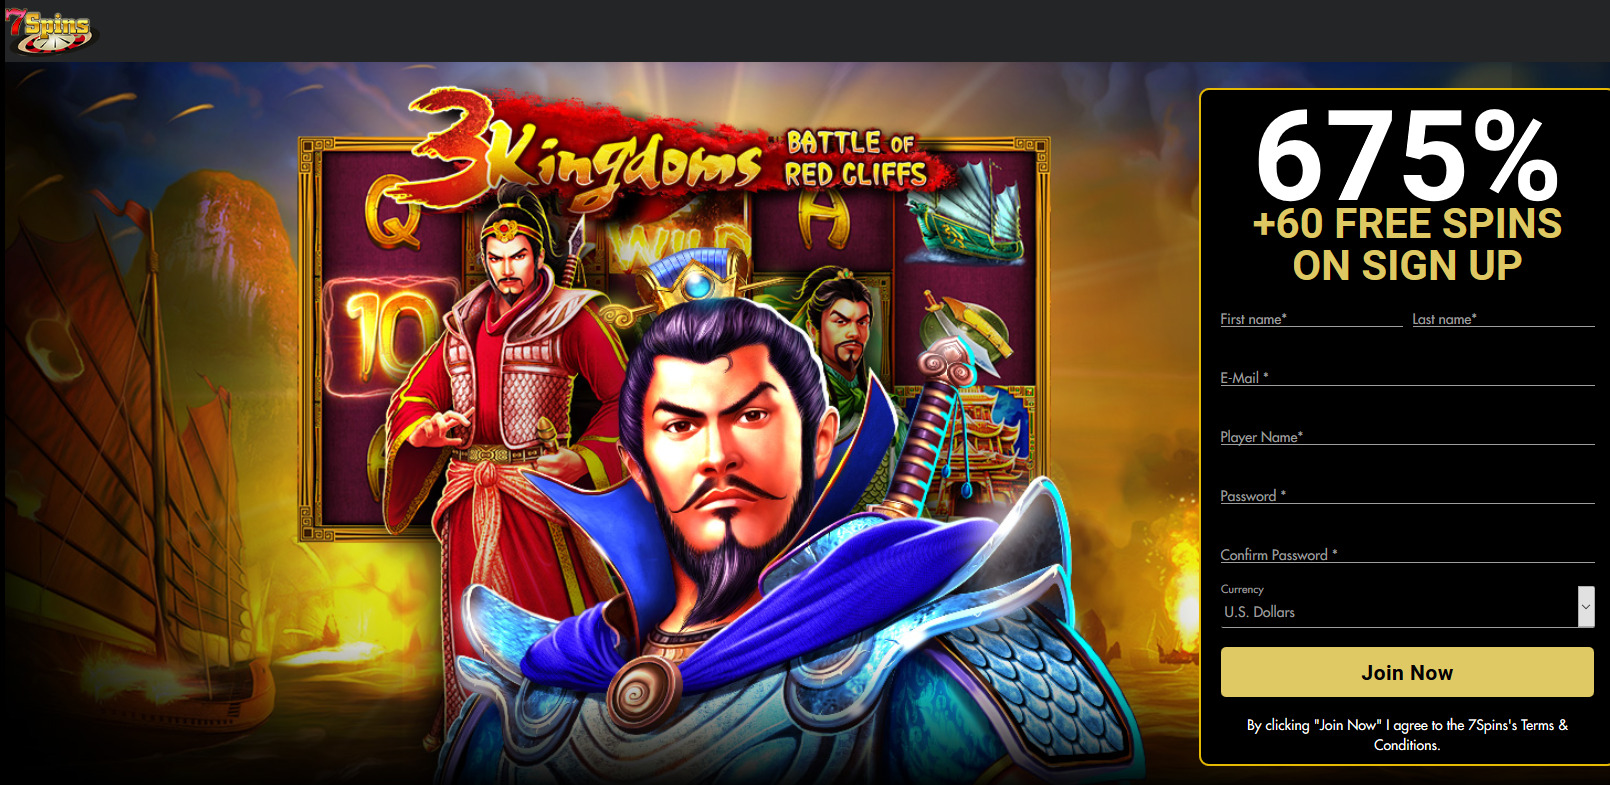 7Spins Casino 675% + 60 free spins. Game: Three Kingdoms